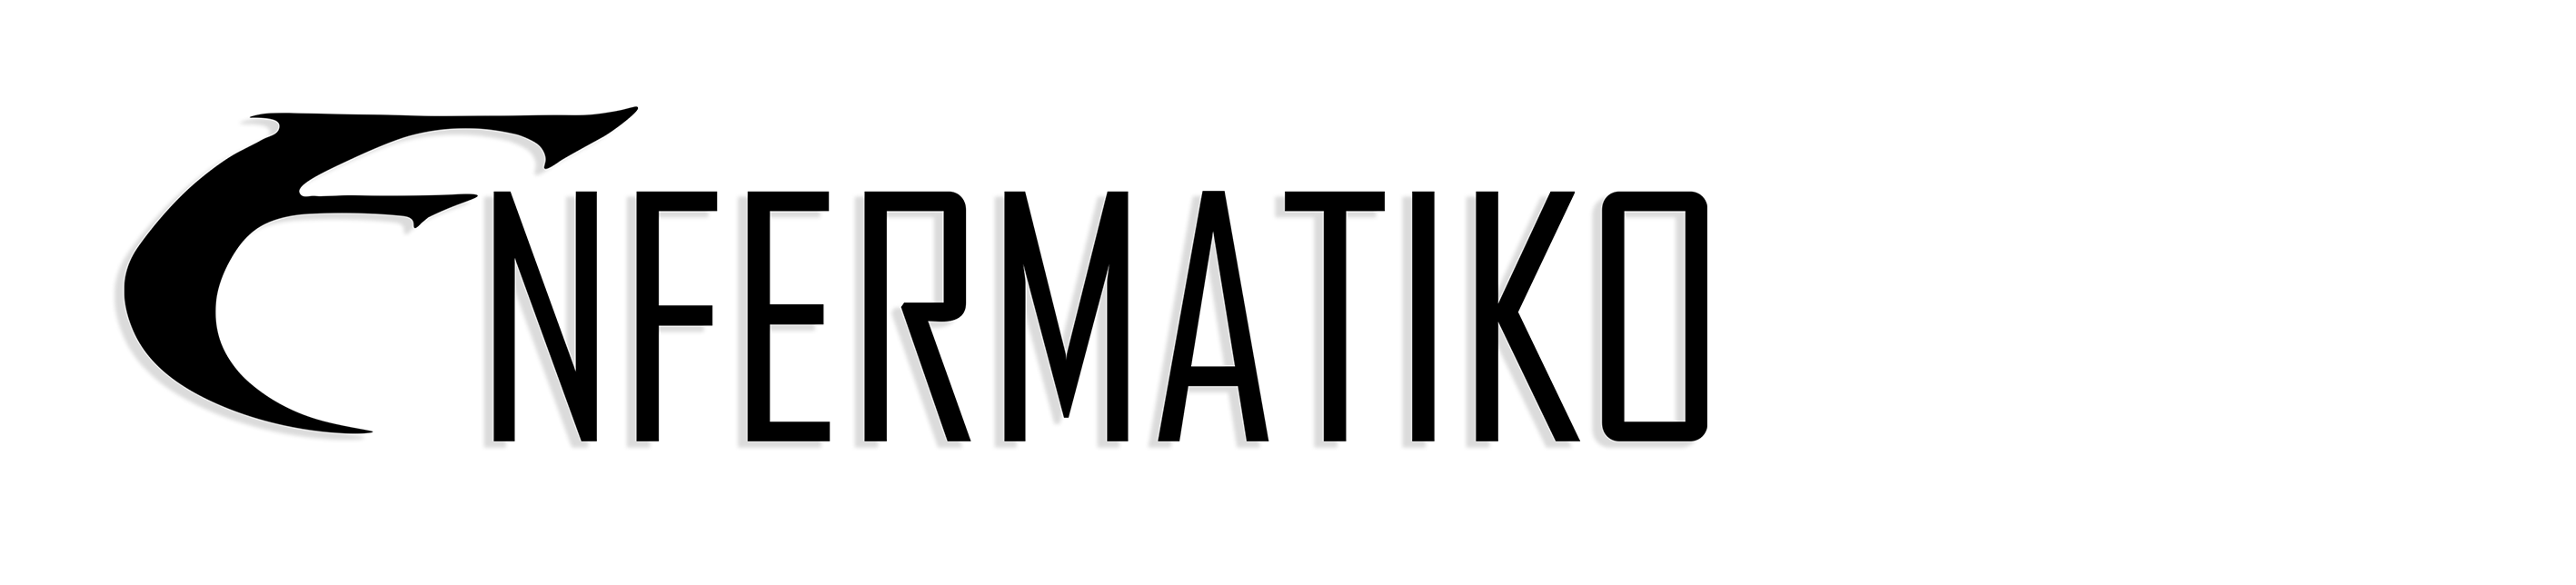 ENFERMATIKO-logo